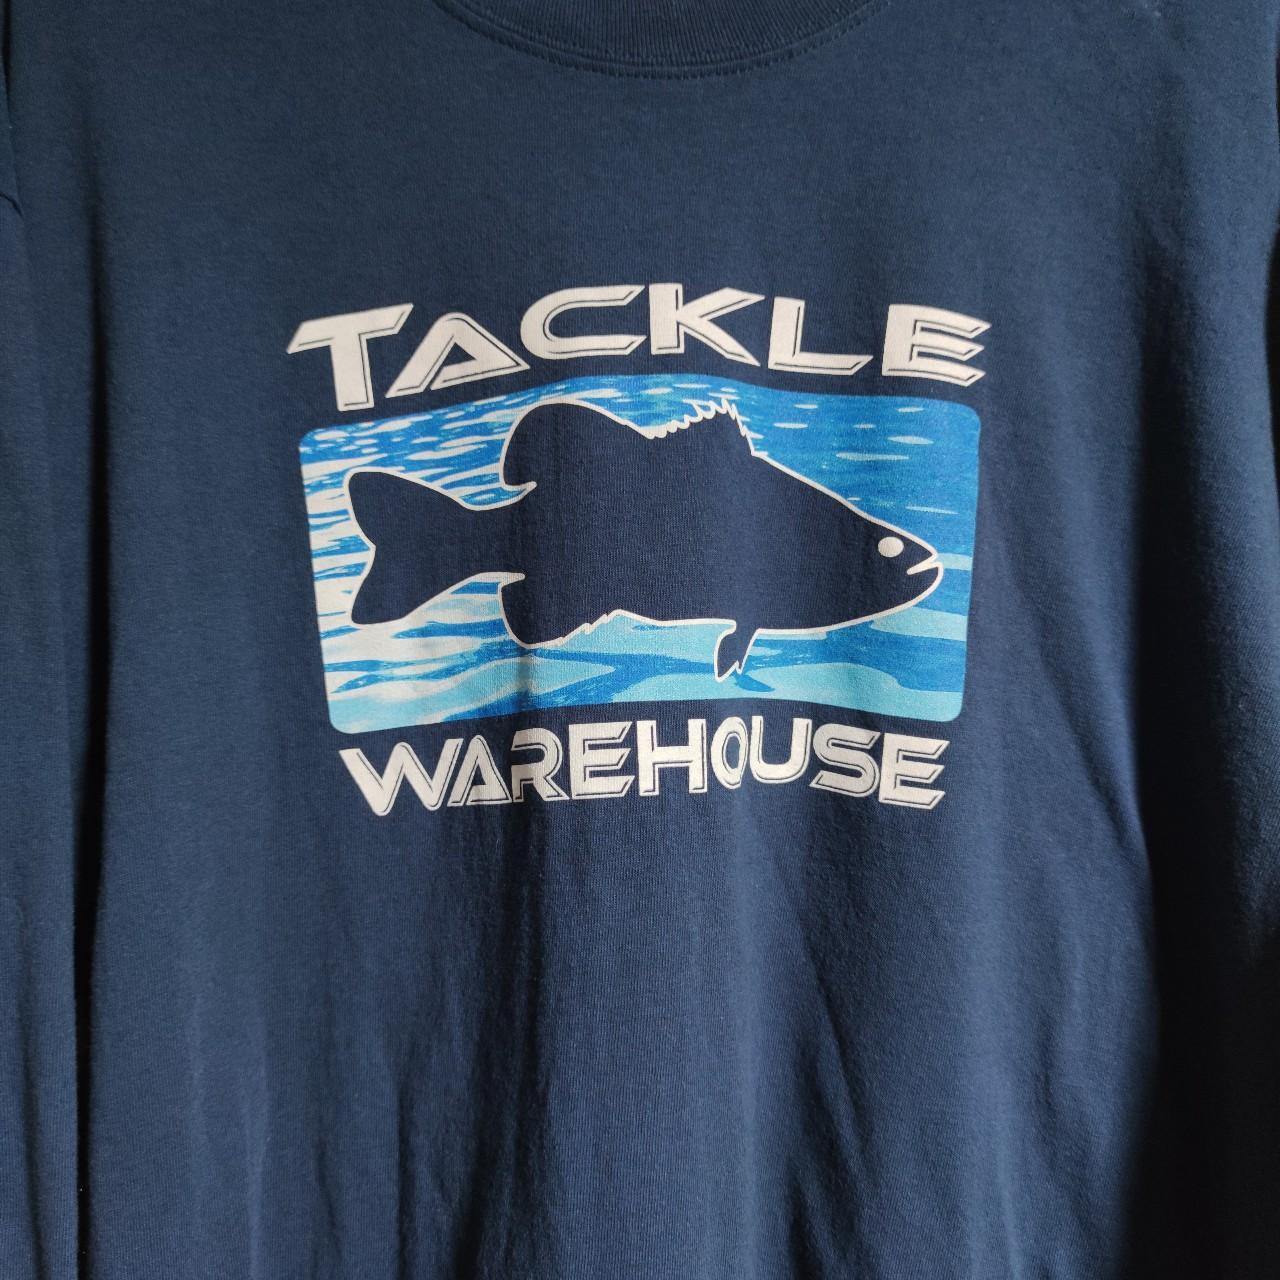 Tackle warehouse tee Size medium 19X26 #hunting - Depop